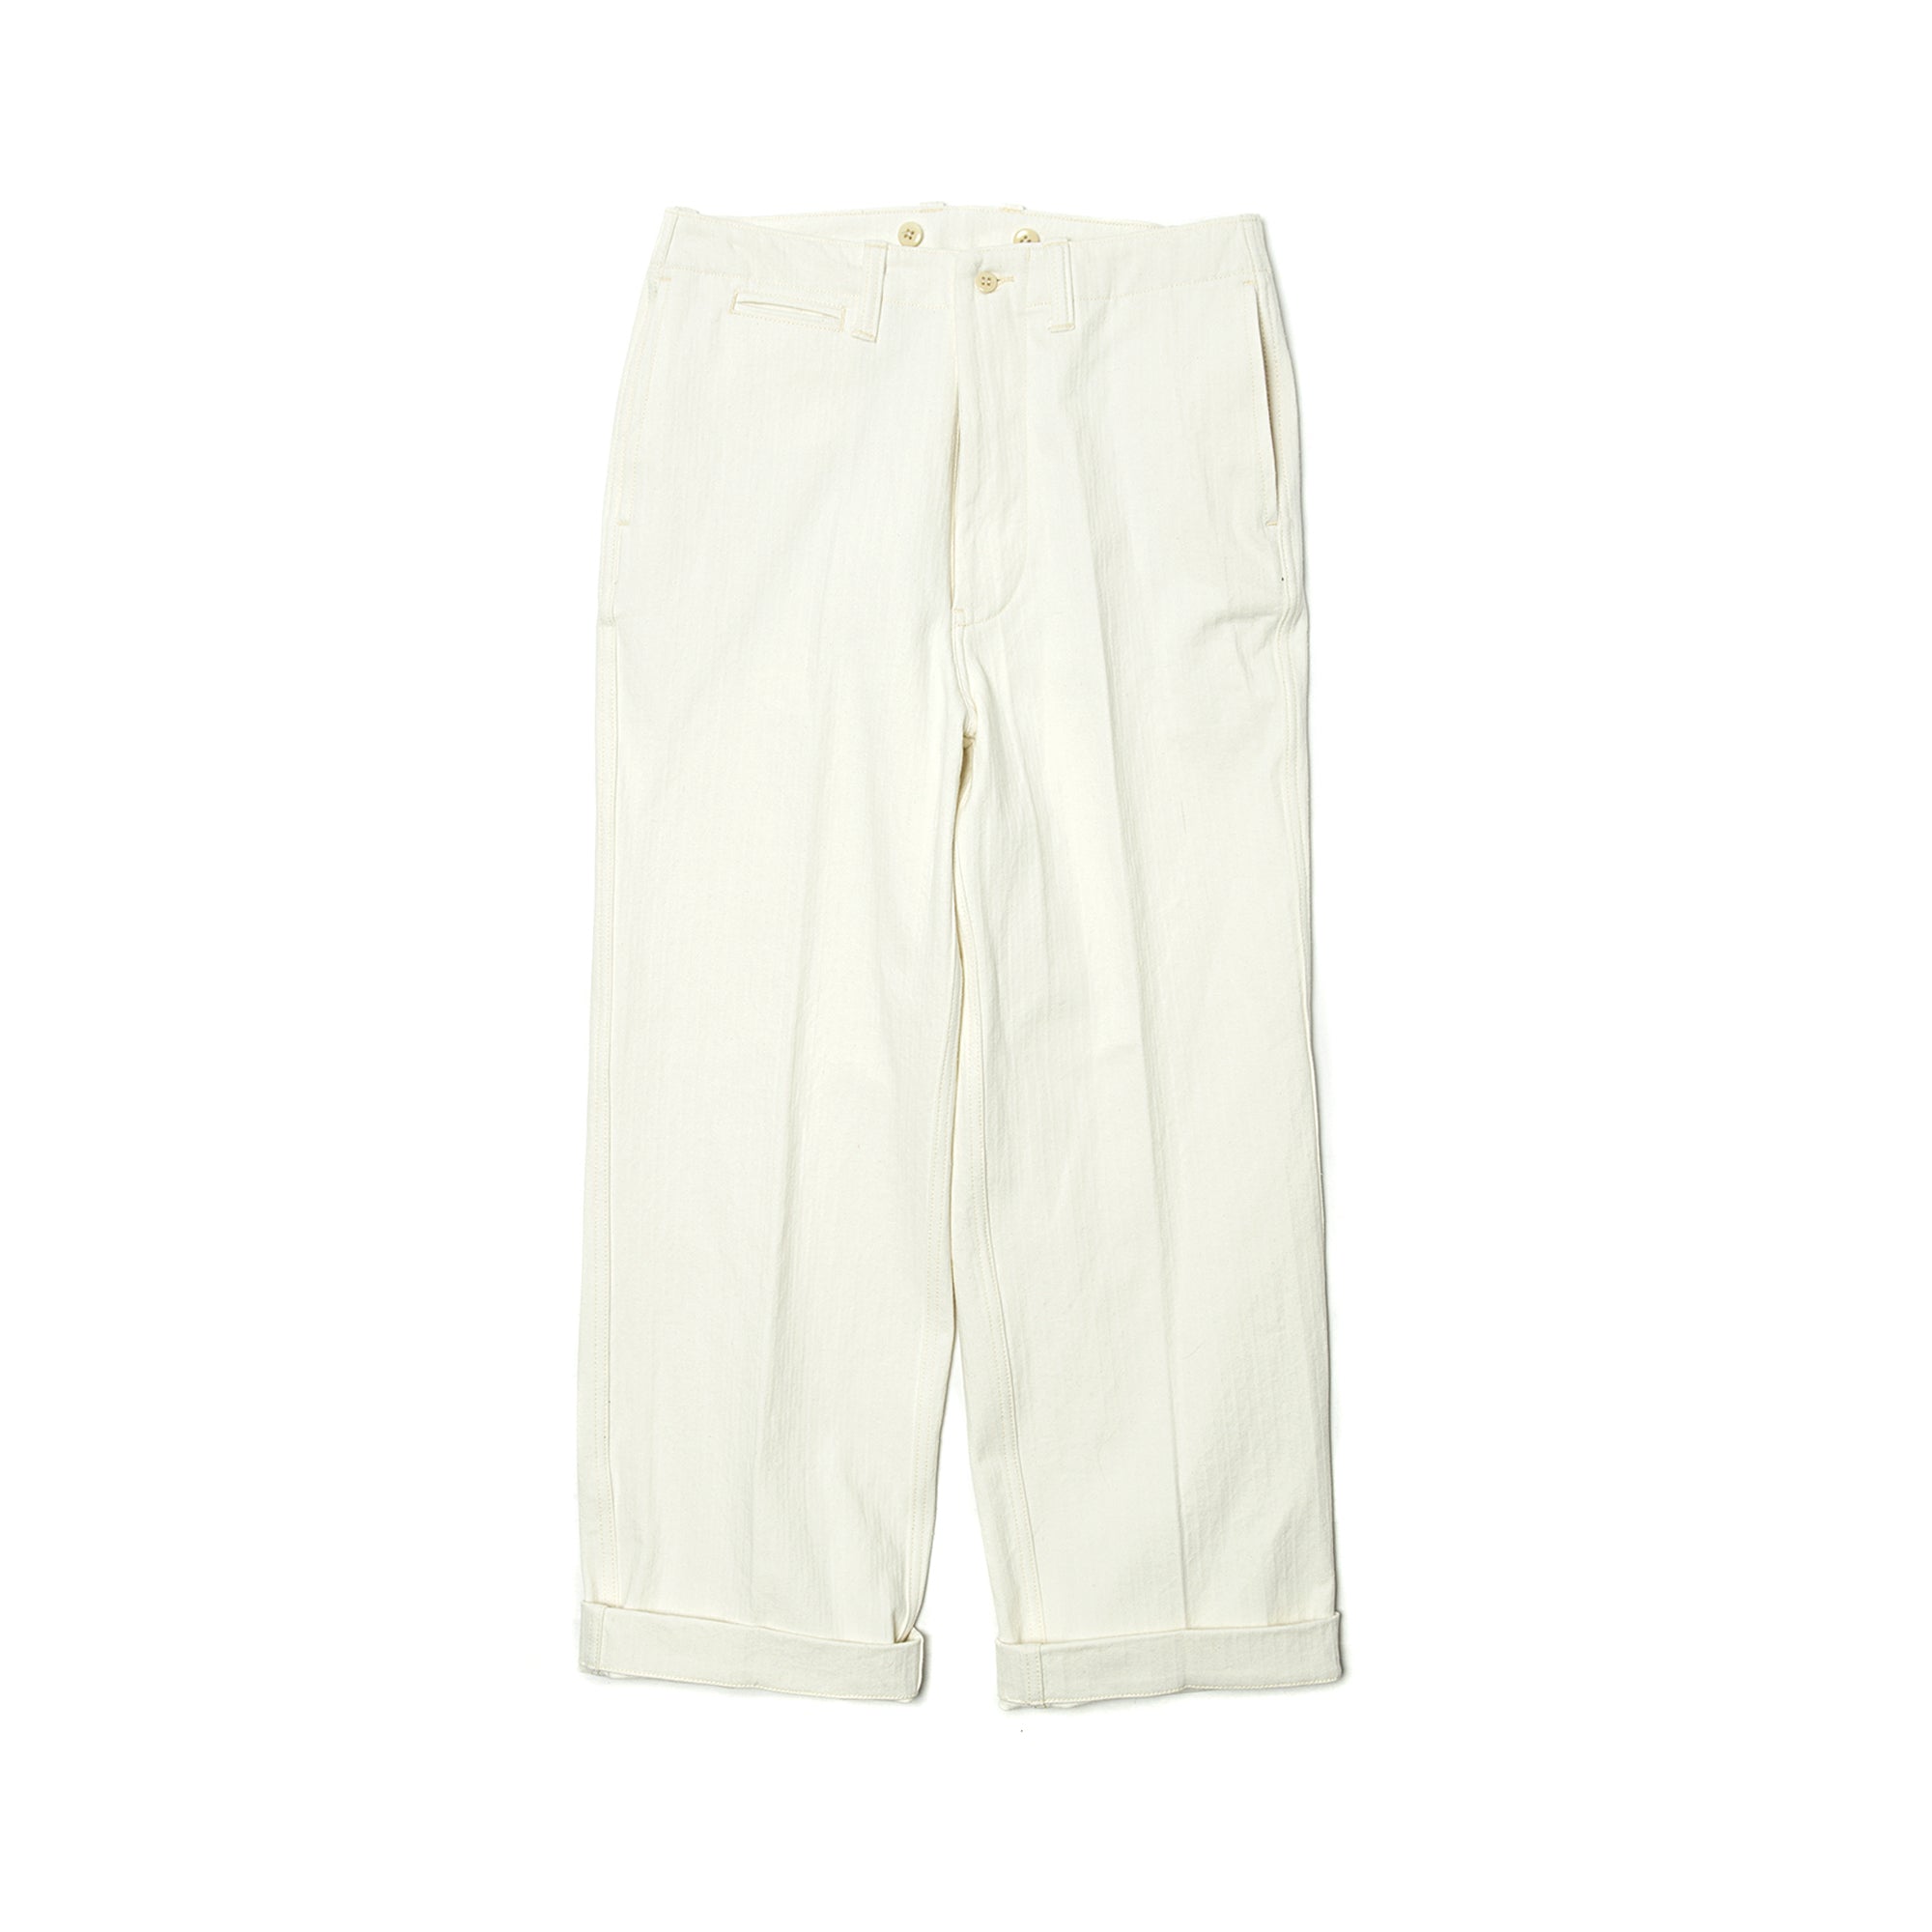 American High-waisted White Wide-leg Pants